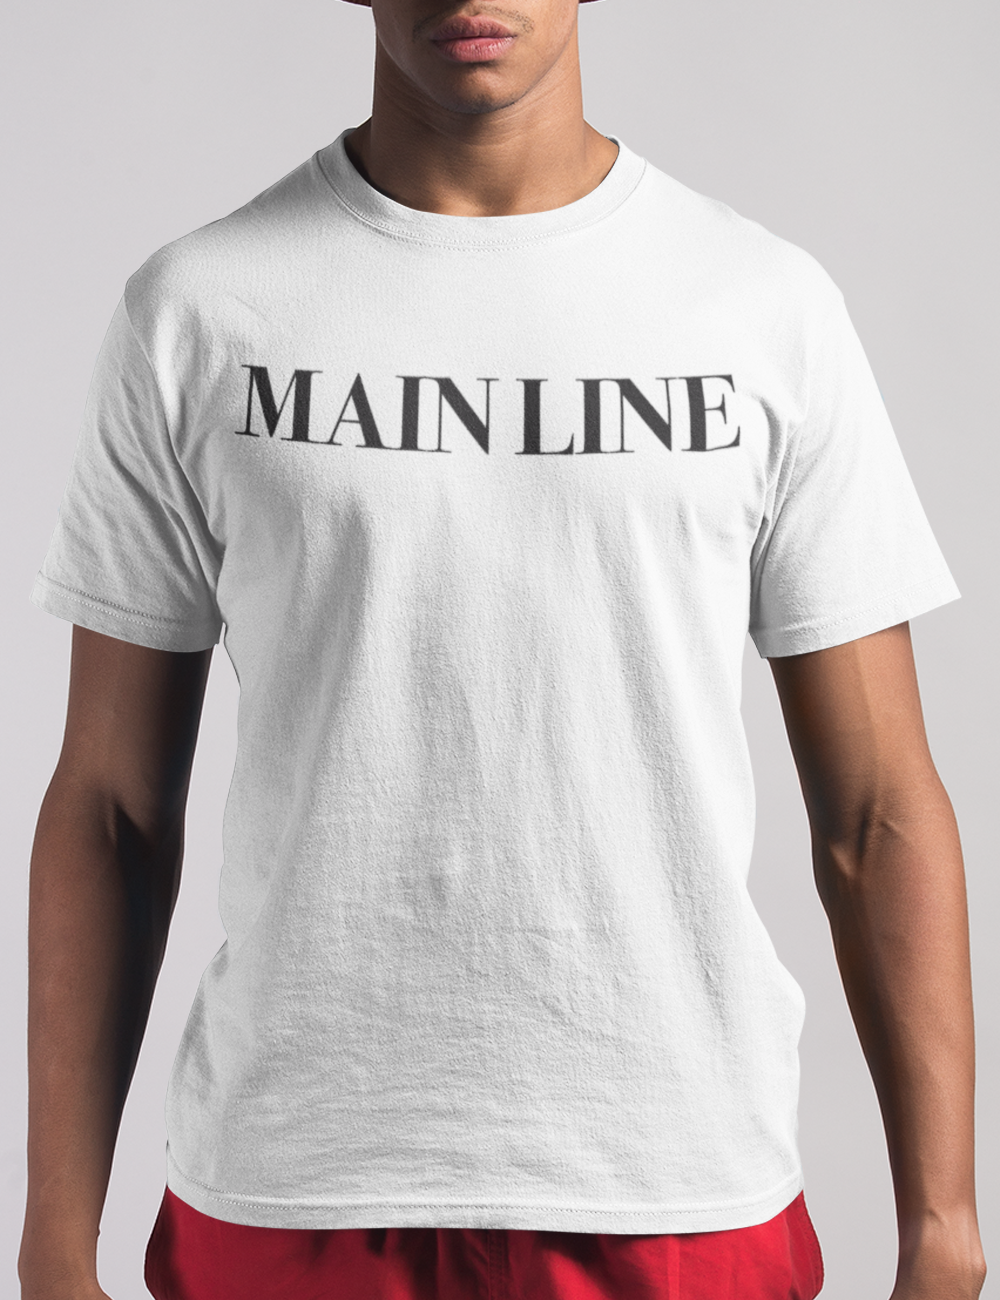 Main Line Men's Classic T-Shirt OniTakai